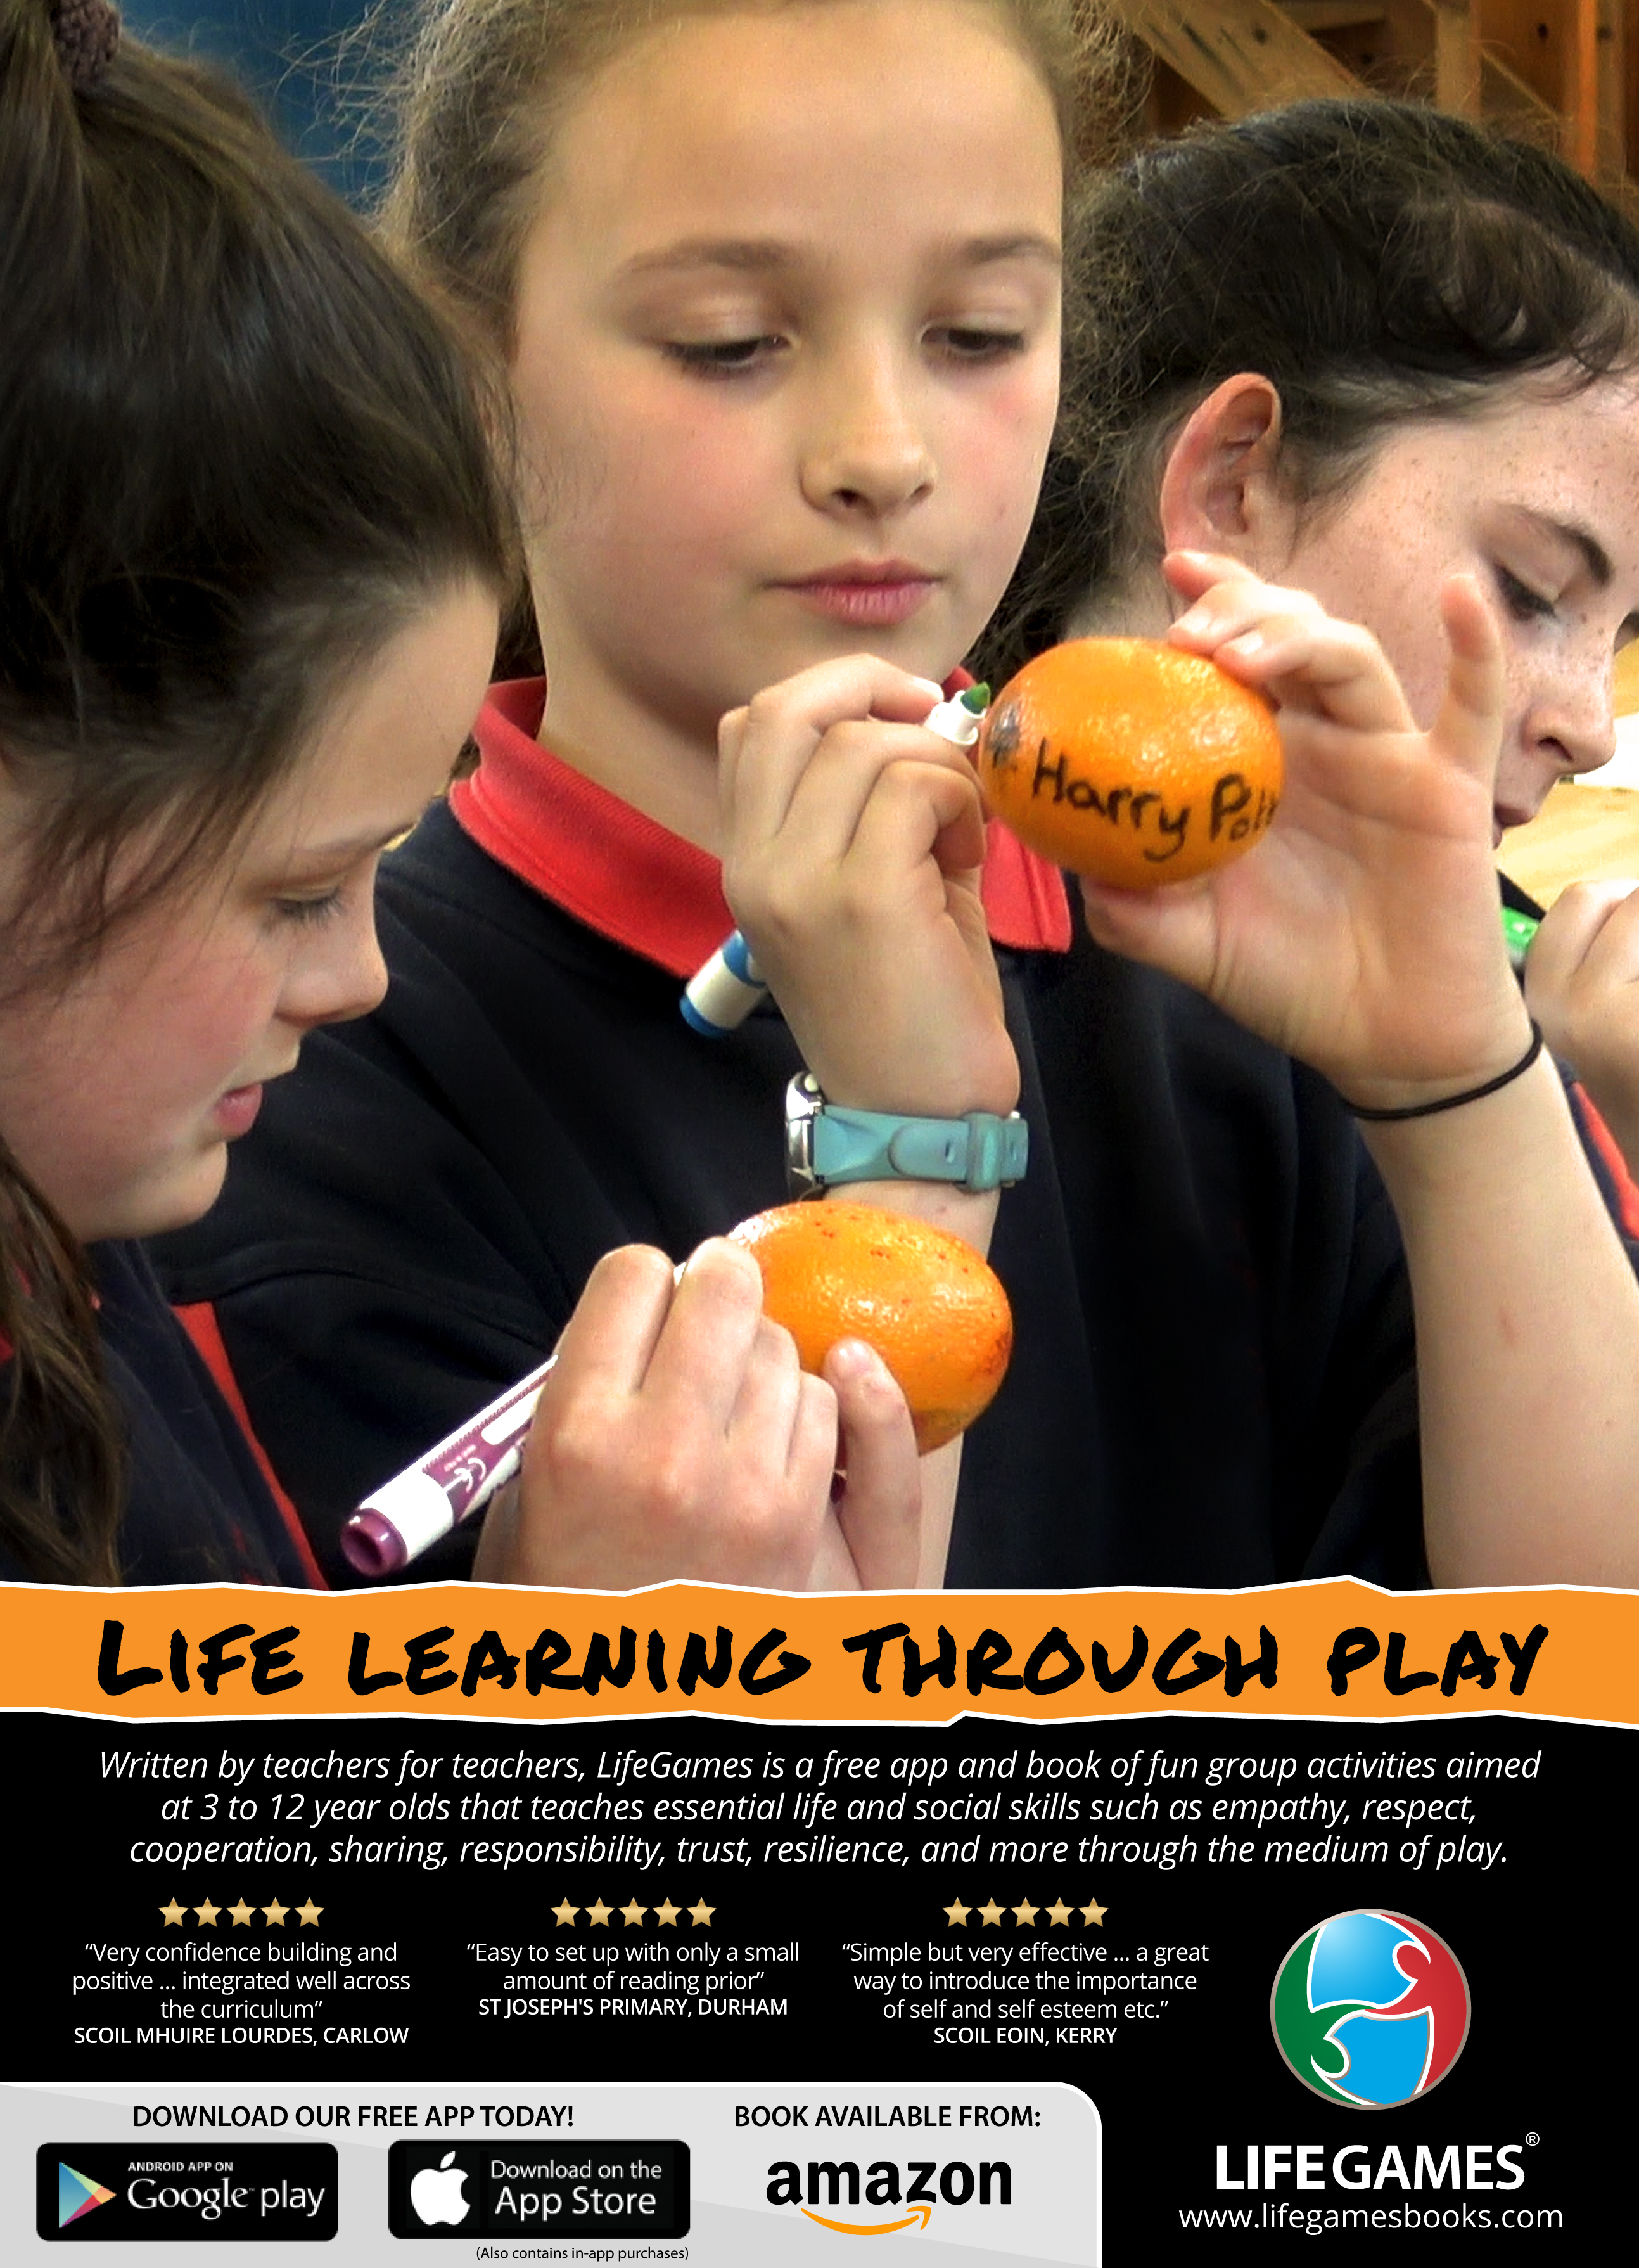 LifeGames advert in The Educator magazine screenshot